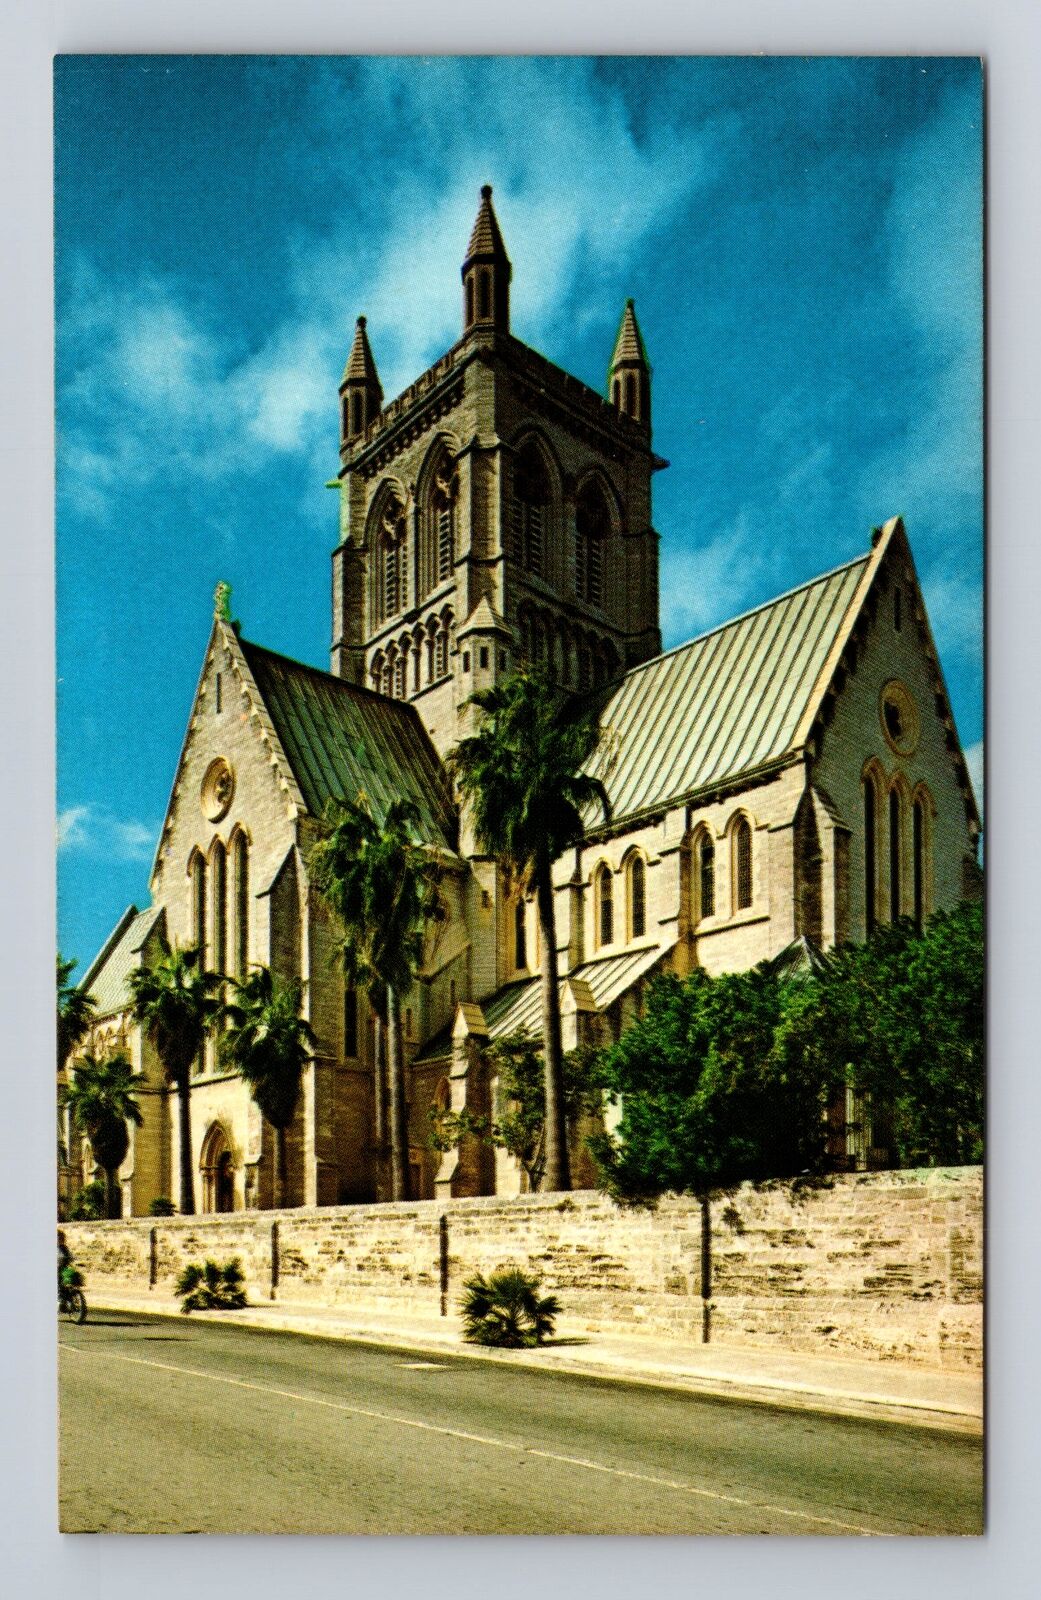 Bermuda, Bermuda's Anglican Cathedral, Most Holy Trinity, Vintage Postcard